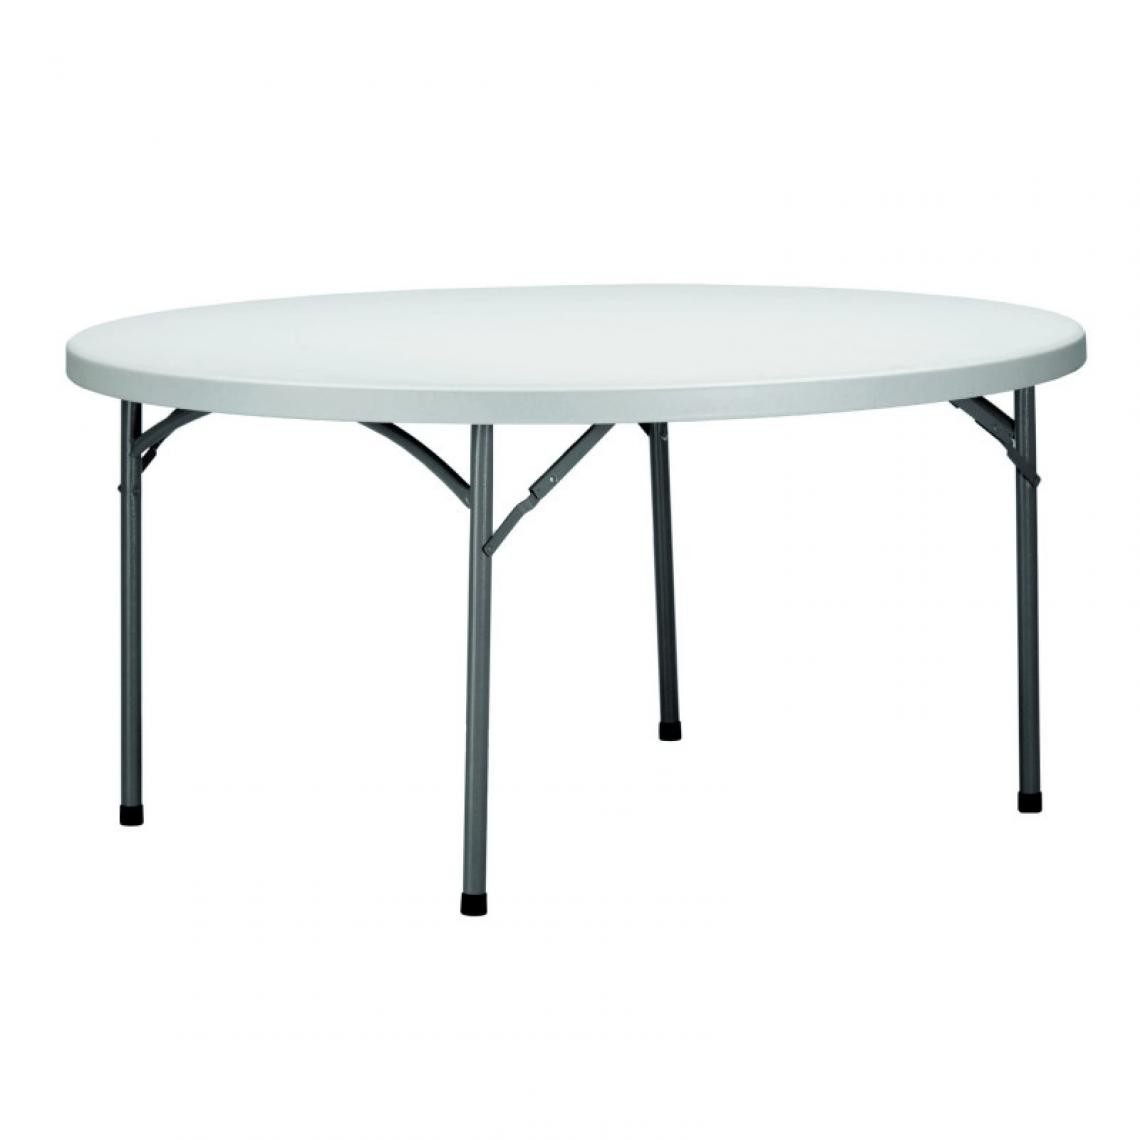 Resol - Table Verdi Ø150 - RESOL - polyéthylène, acier peint - Tables à manger